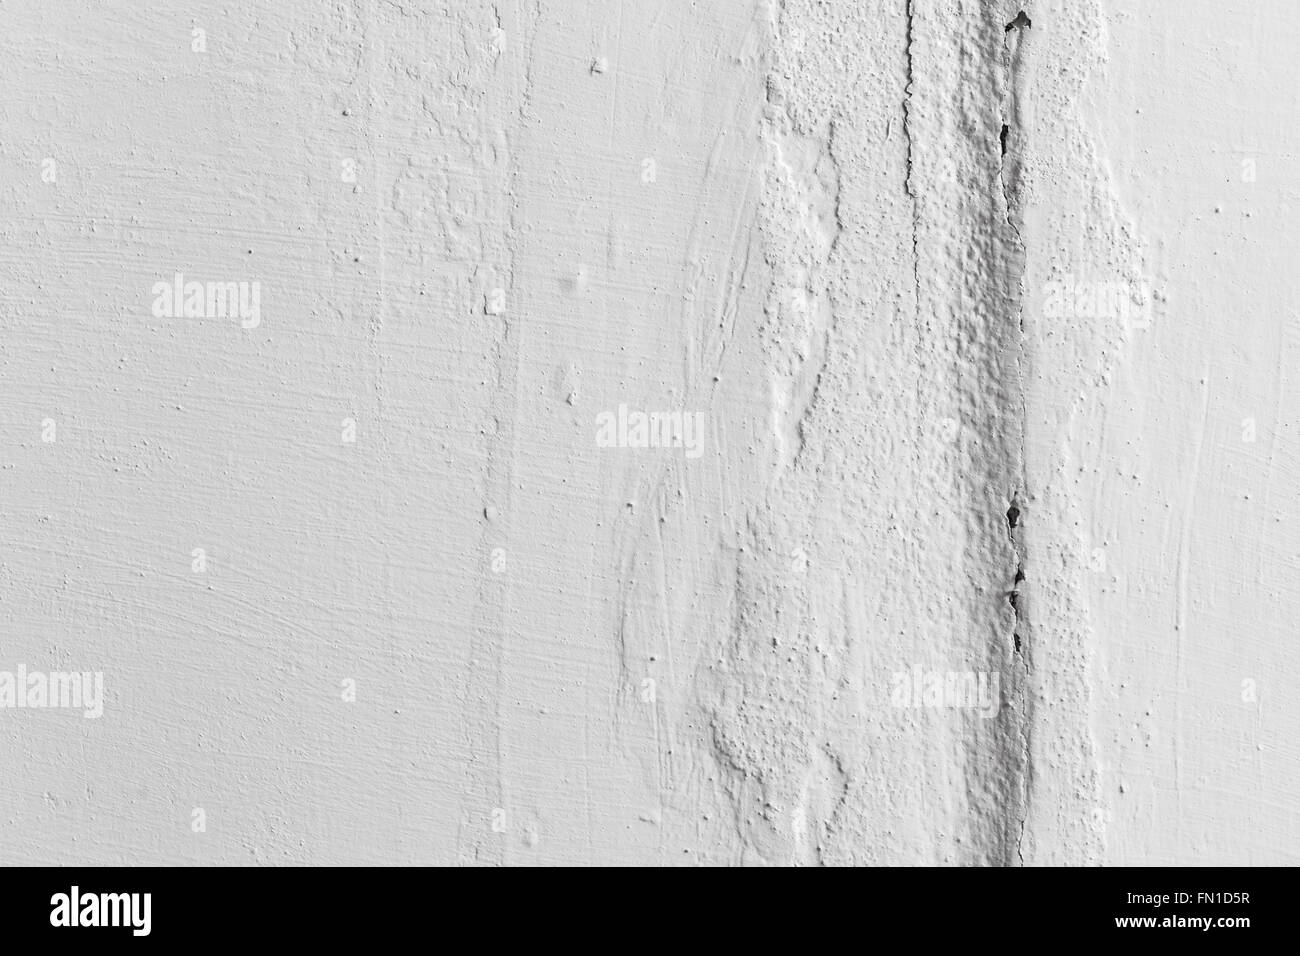 Vertikaler Riss in weiß gestrichenen Wand, Closeup Fototexturen Stockfoto